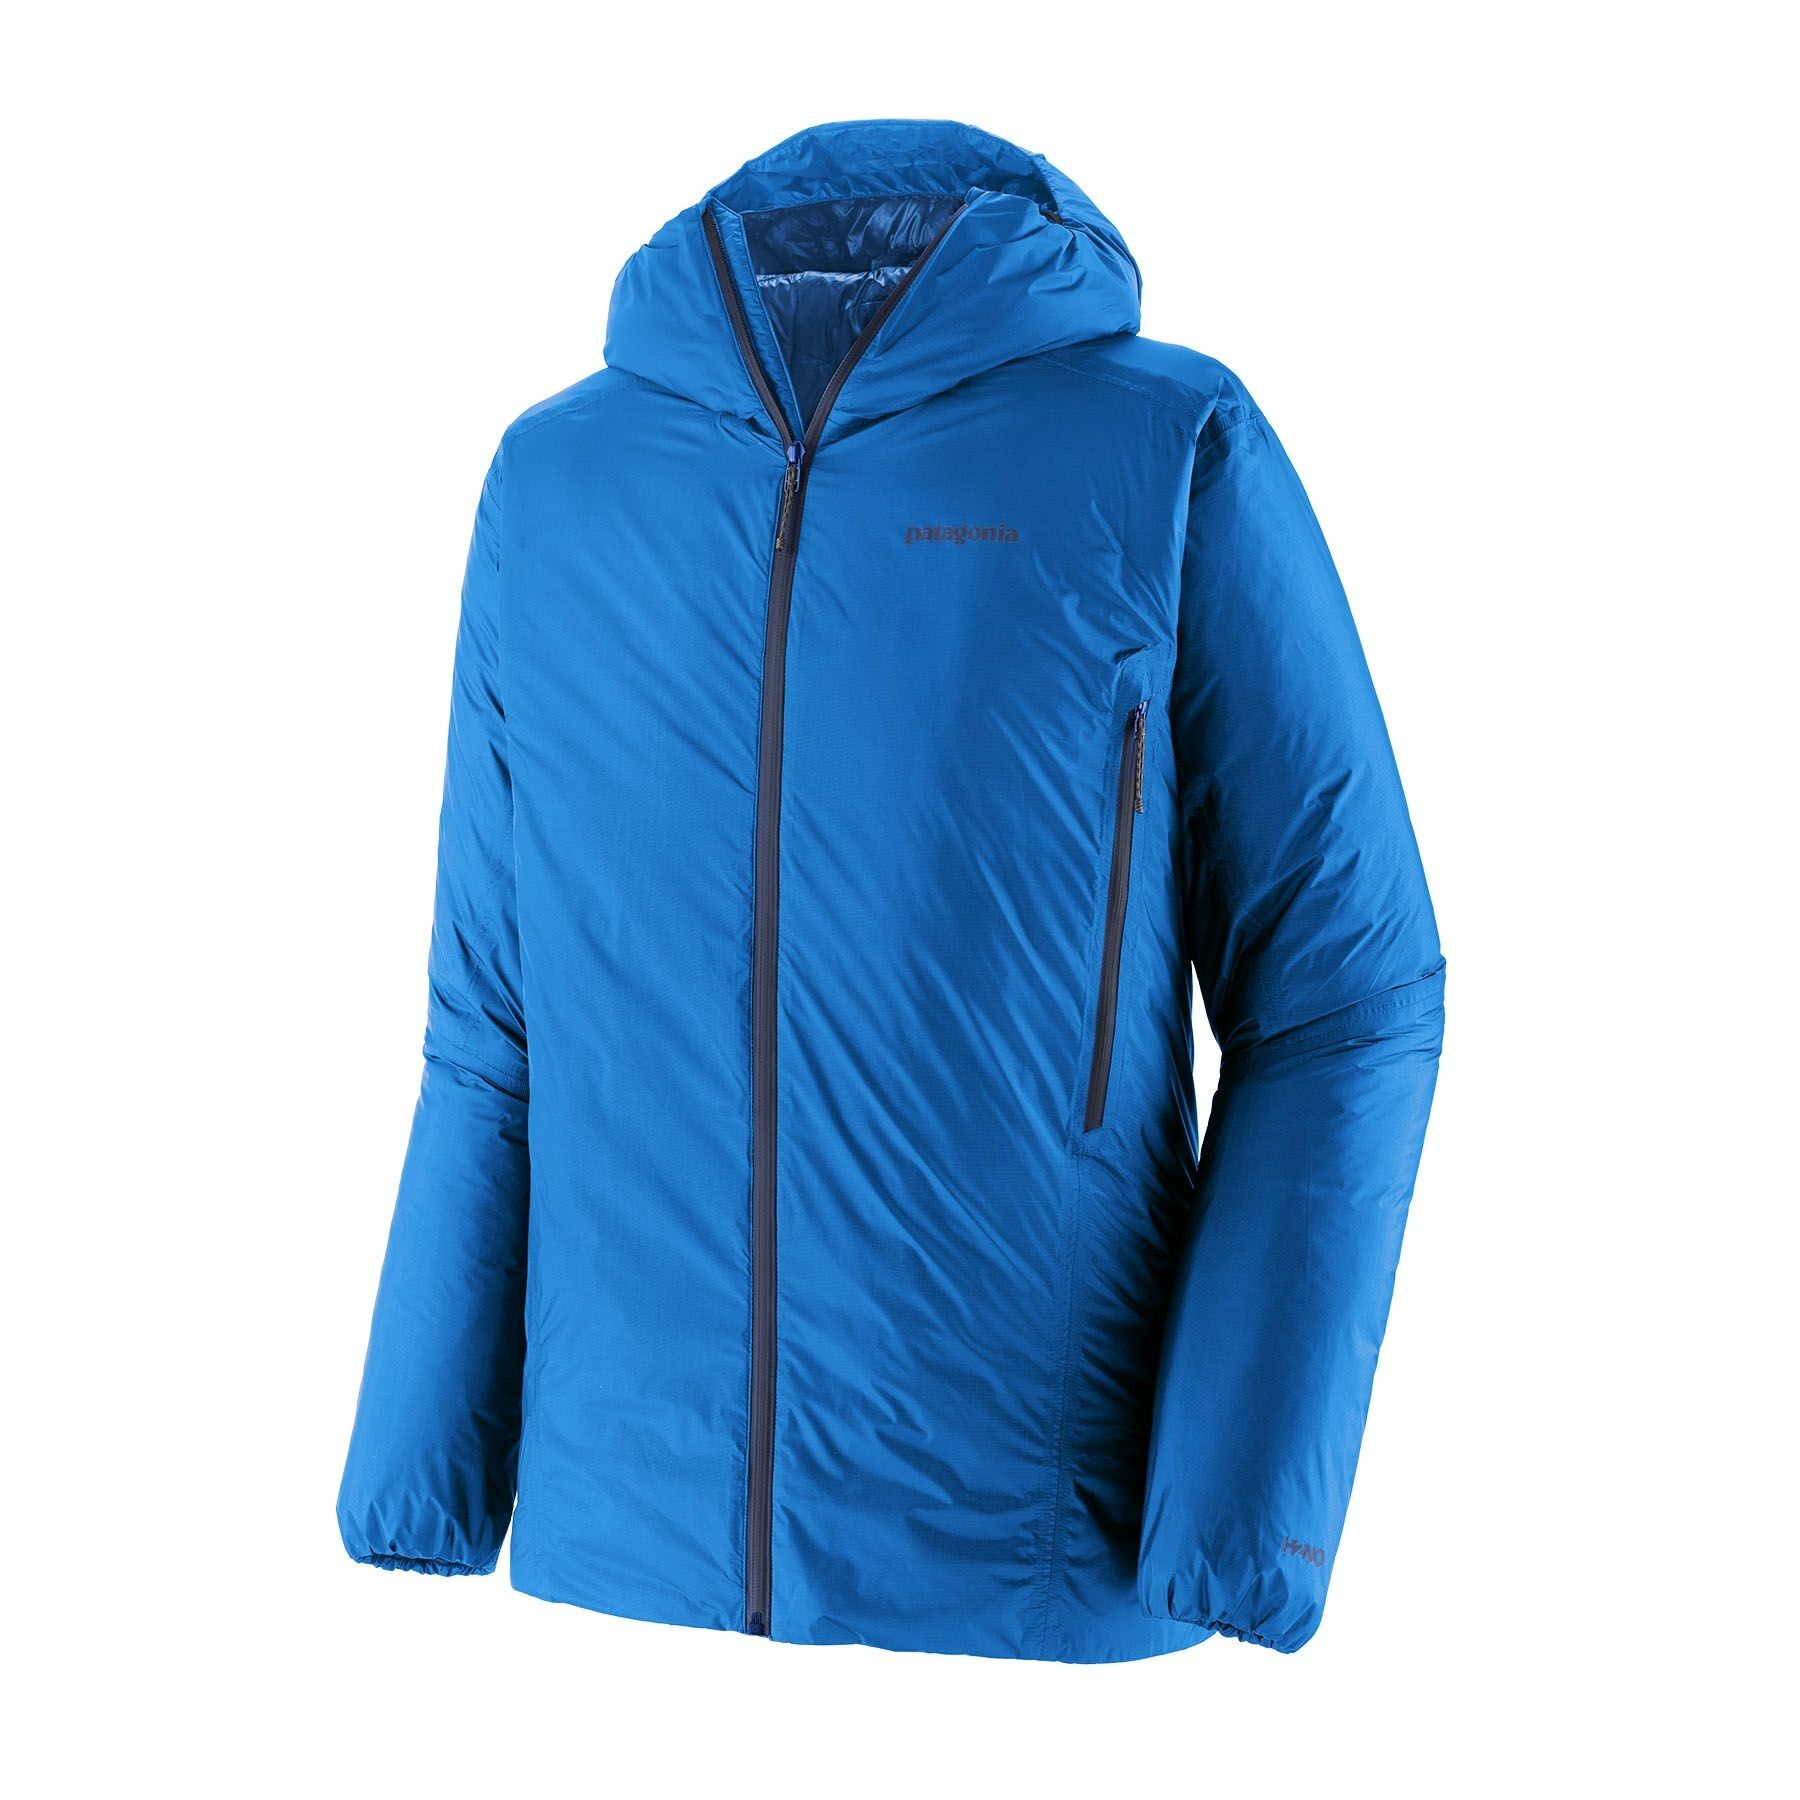 Patagonia Micropuff Storm Jacket - Chaqueta de esquí - Hombre